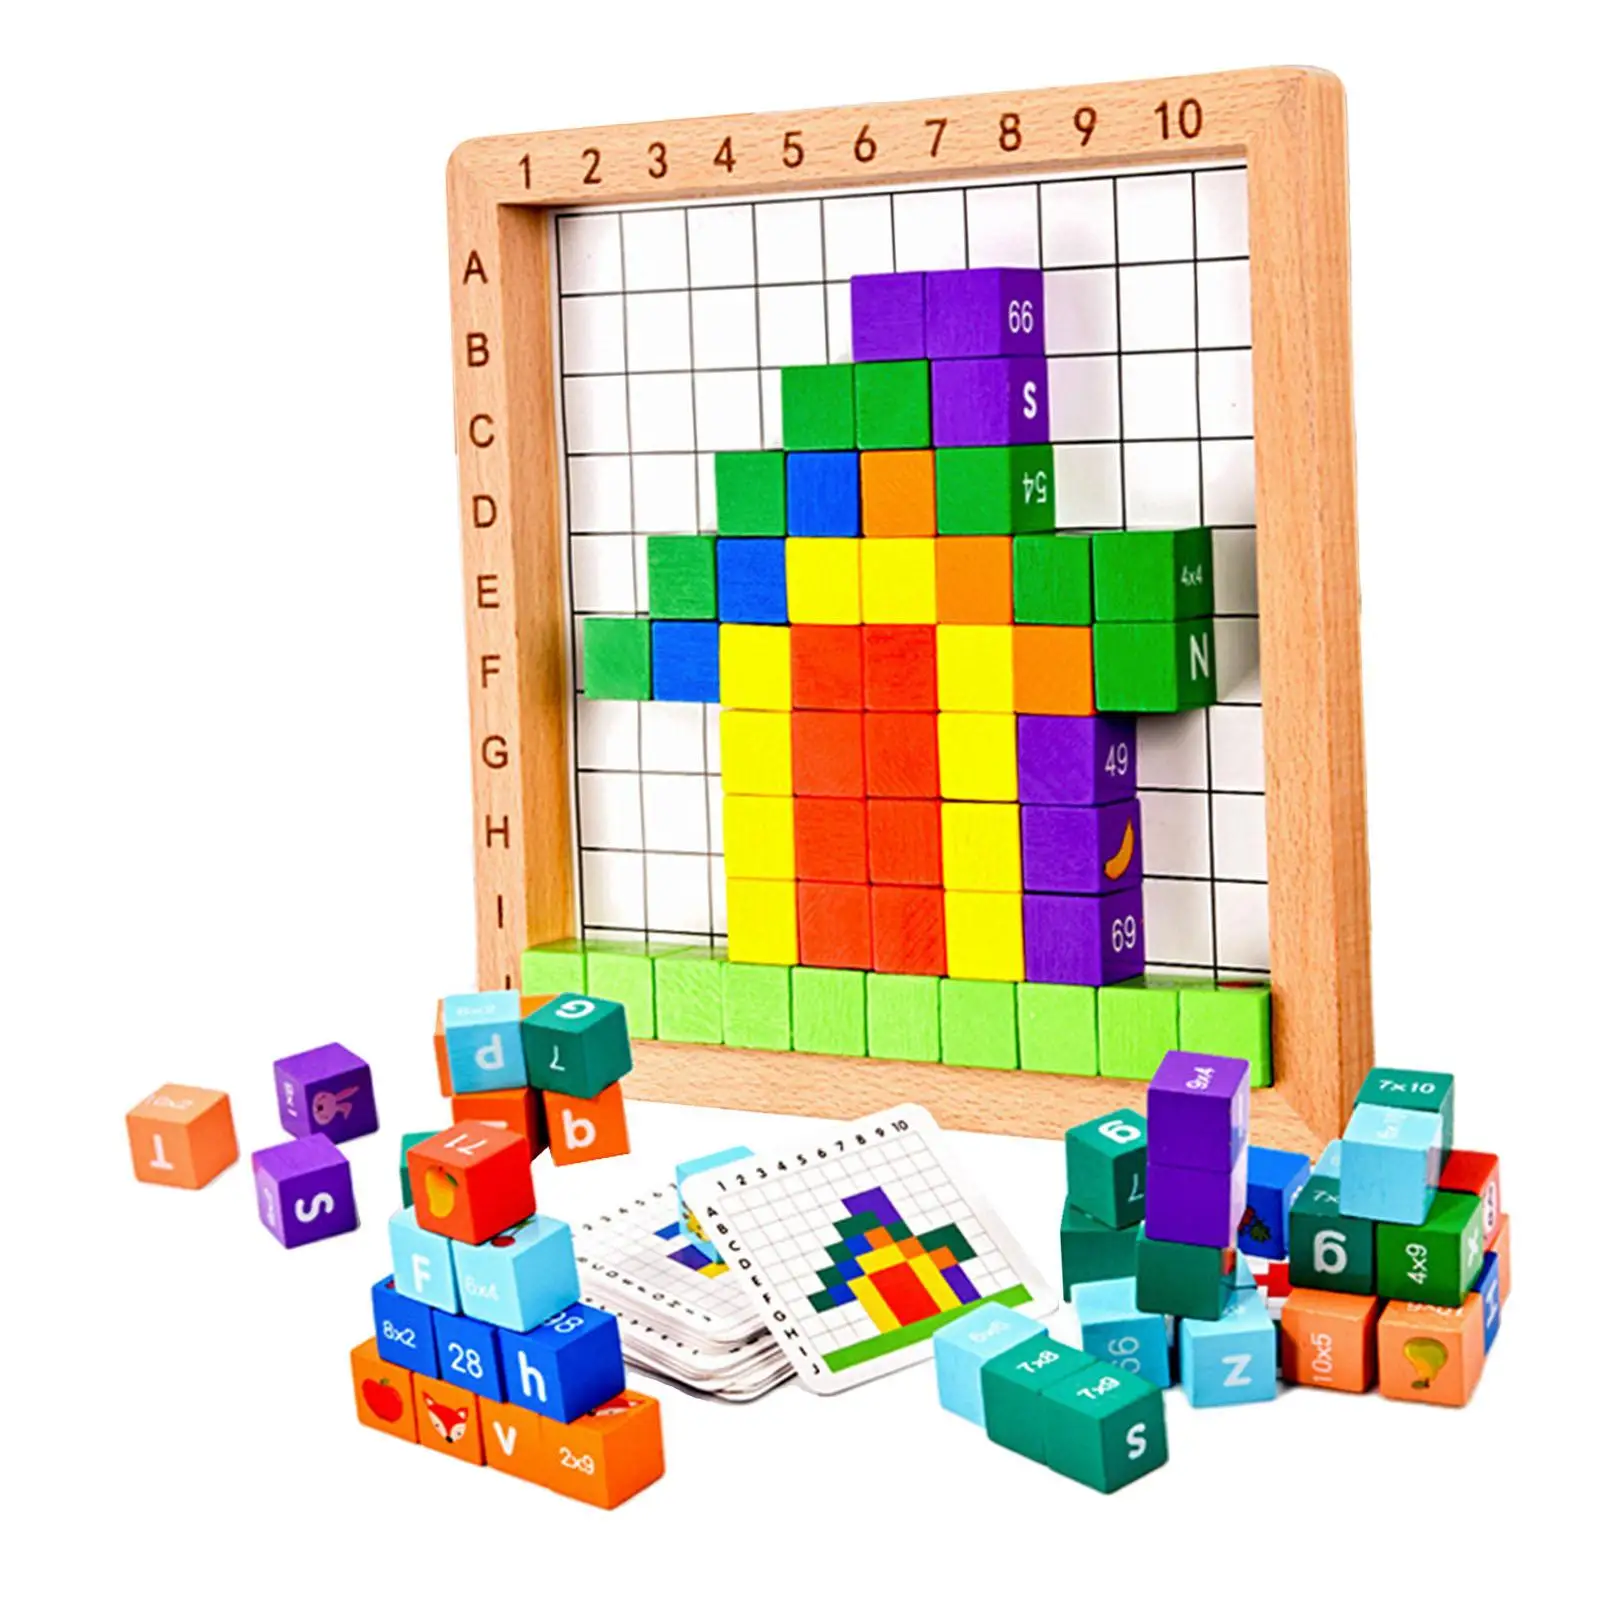 Wooden Building Blocks Alphabet for Coordination Creativity Logical Thinking